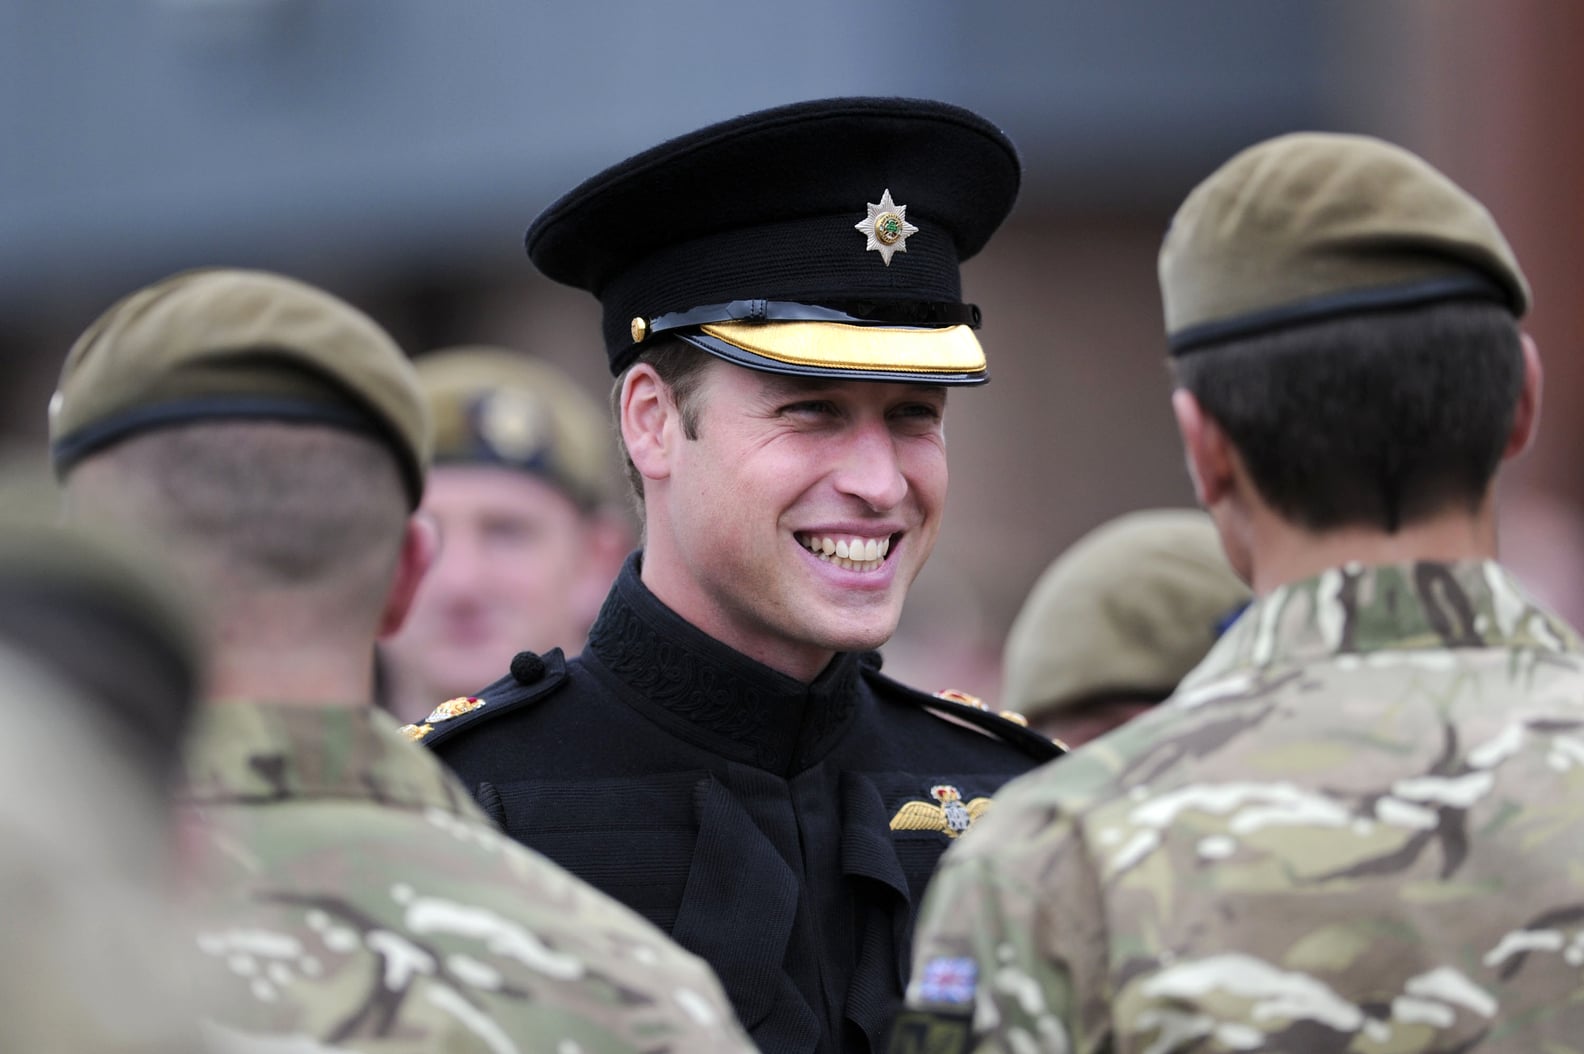 Prince William in Uniform Pictures | POPSUGAR Celebrity